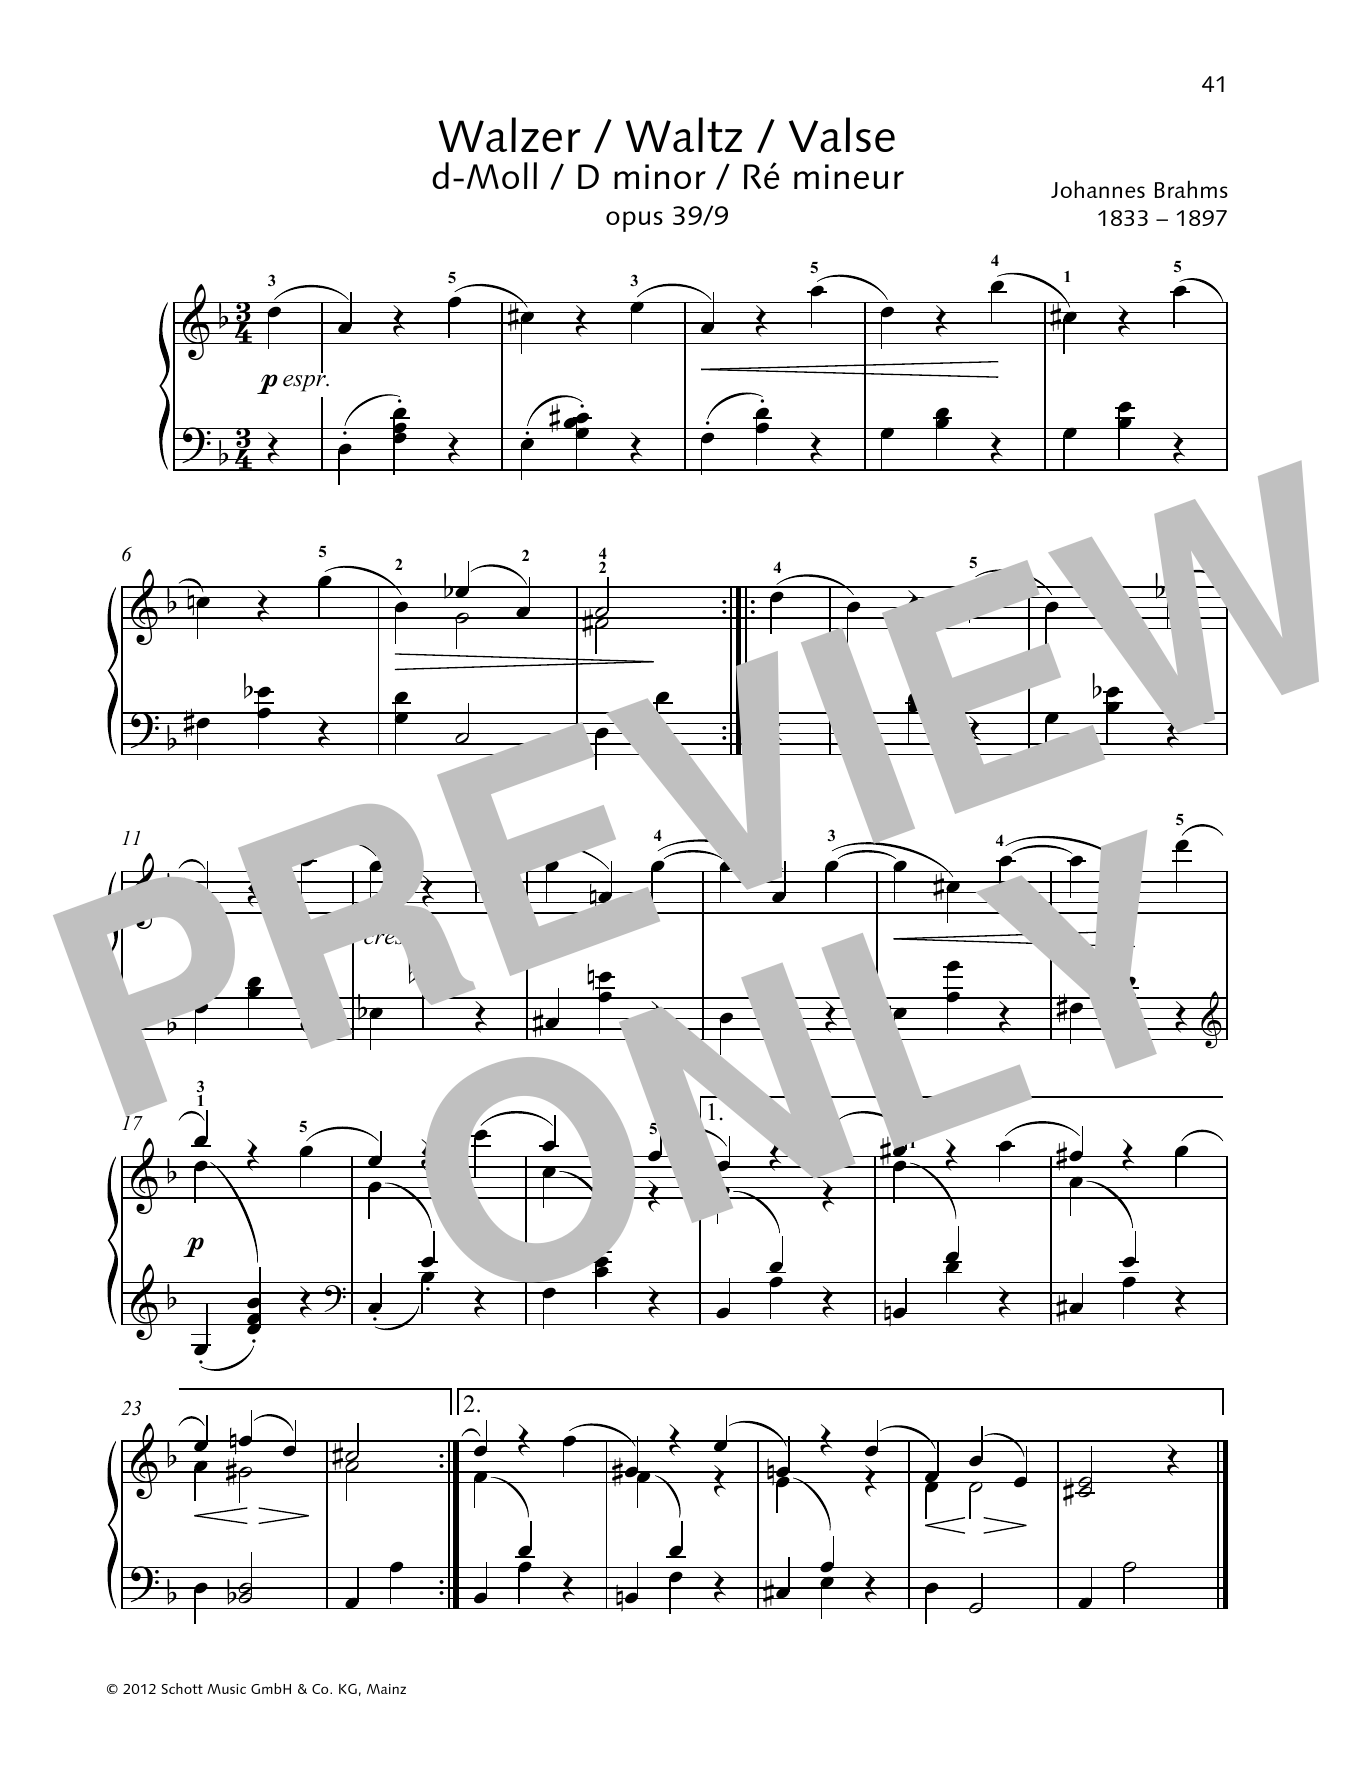 Monika Twelsiek Waltz D minor Sheet Music Notes & Chords for Piano Solo - Download or Print PDF